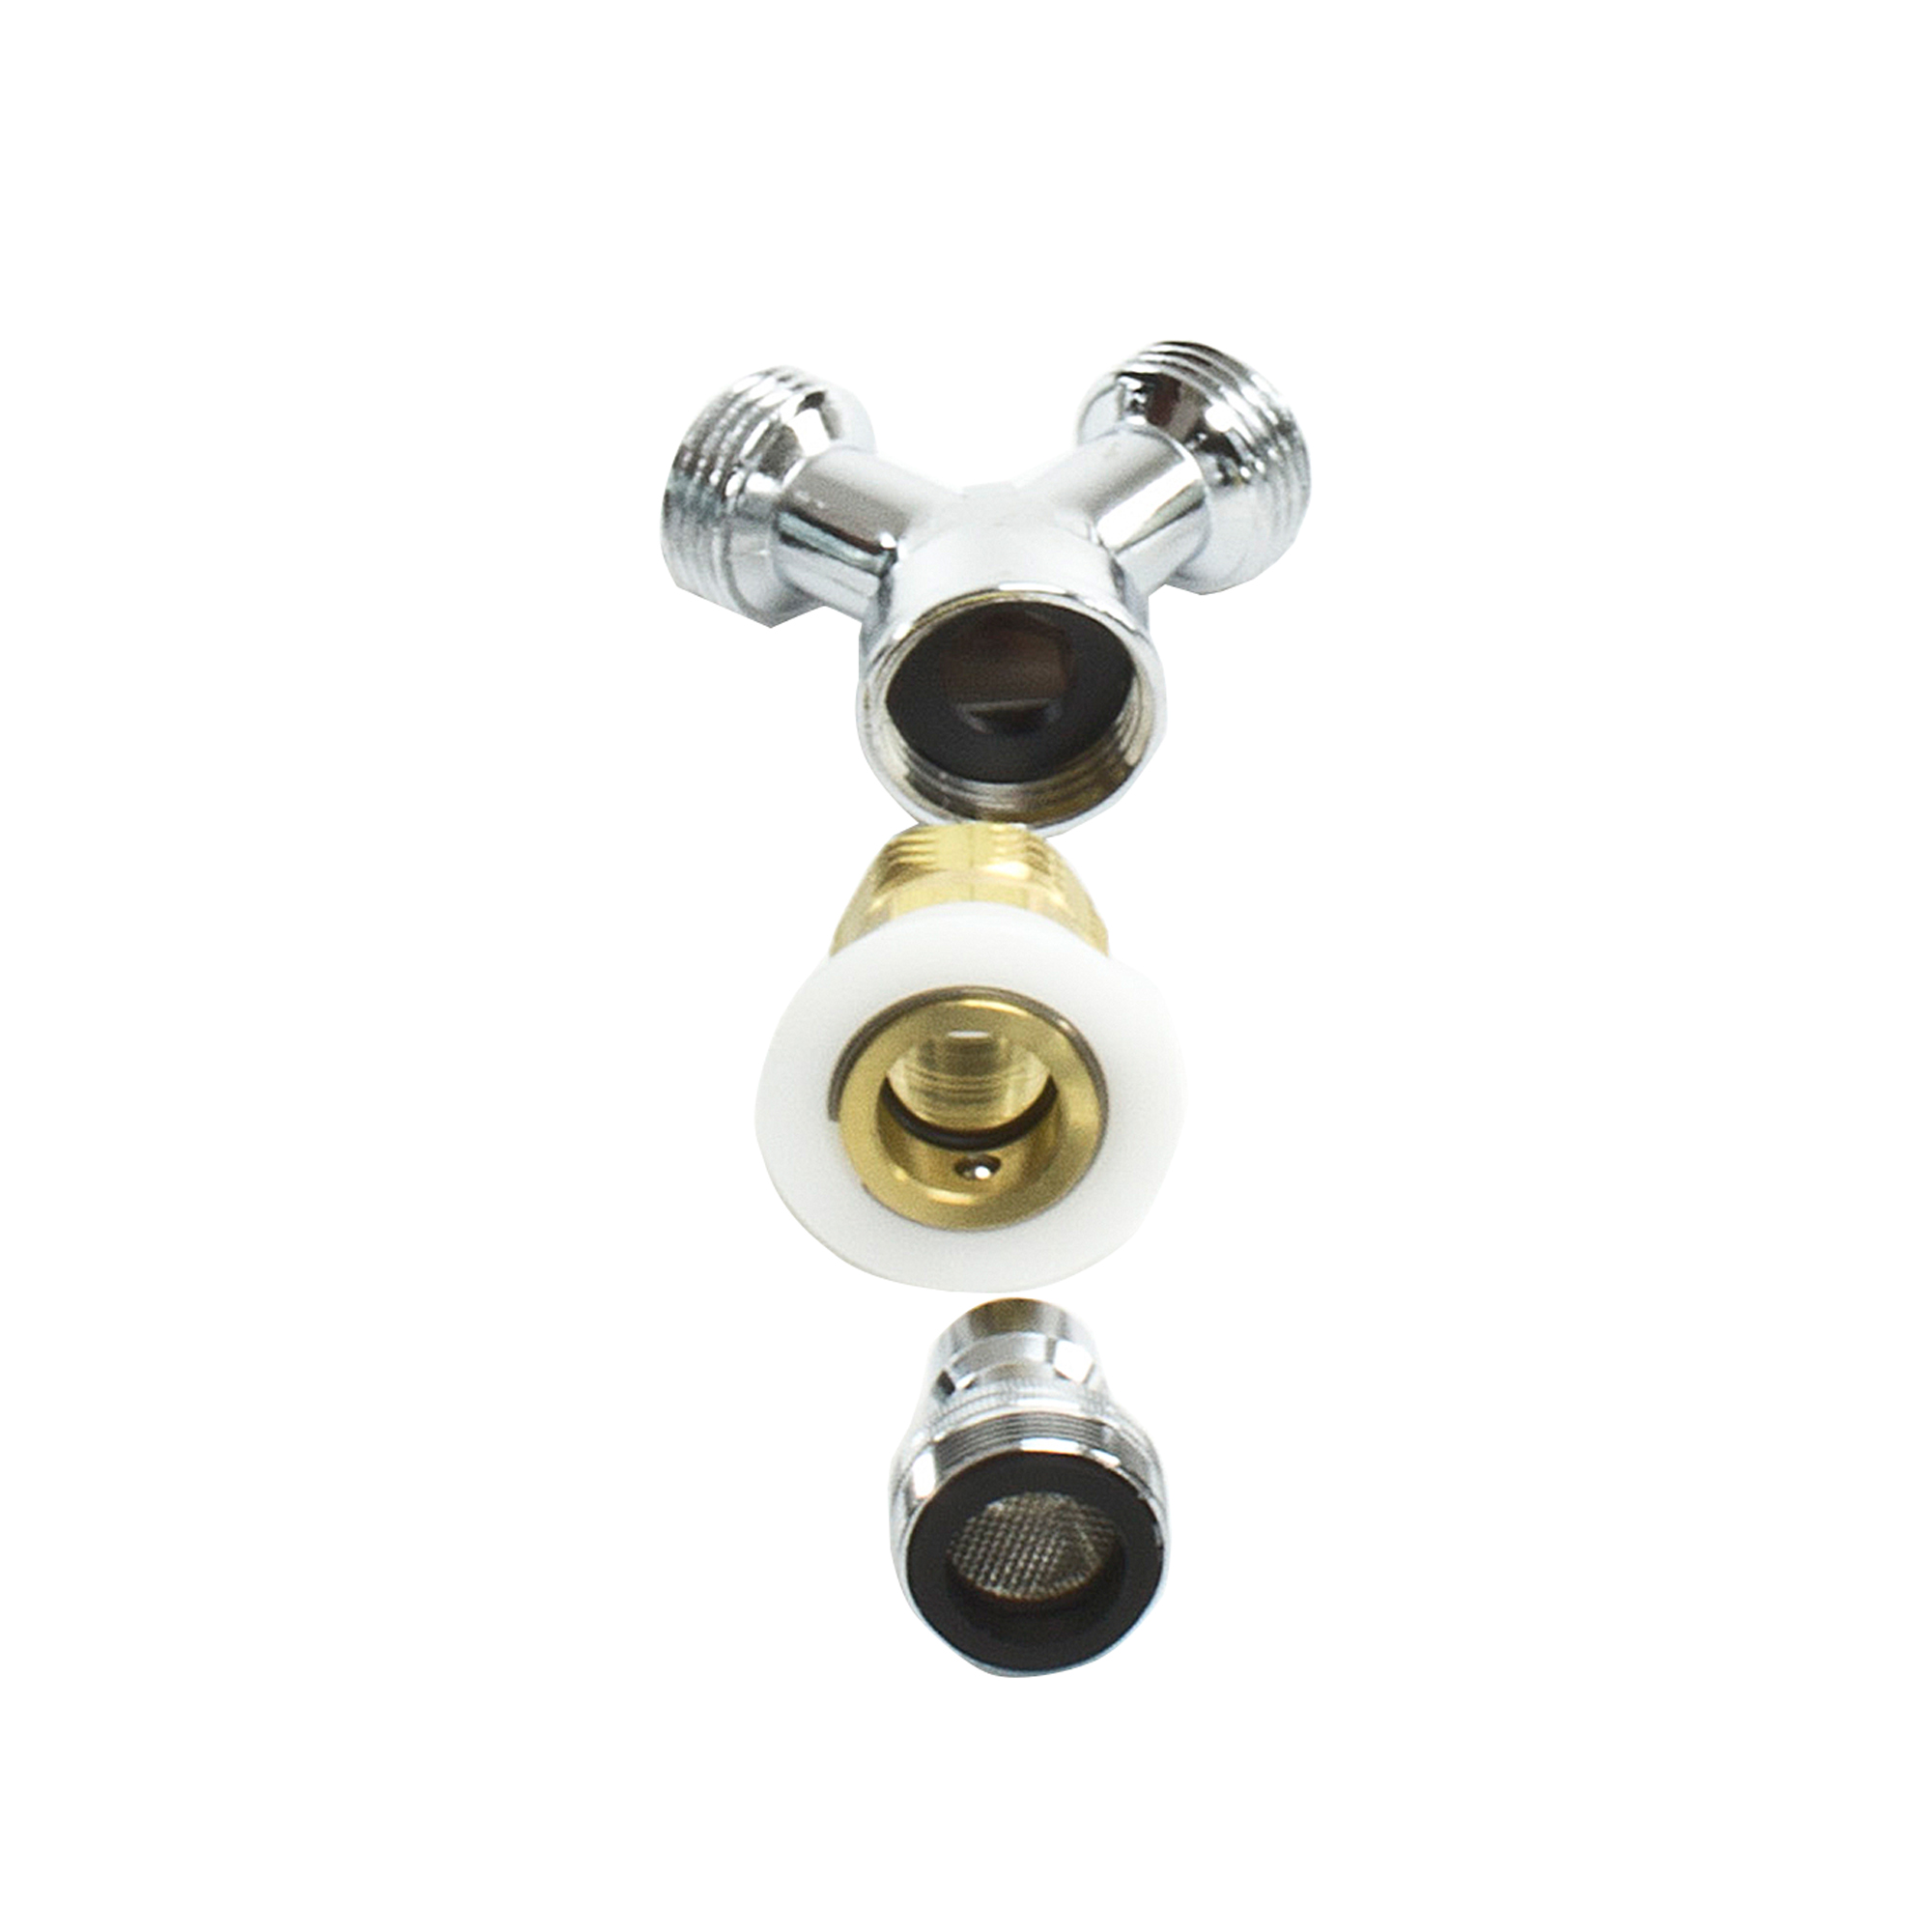 Faucet Adapter Kit - FAK 1071